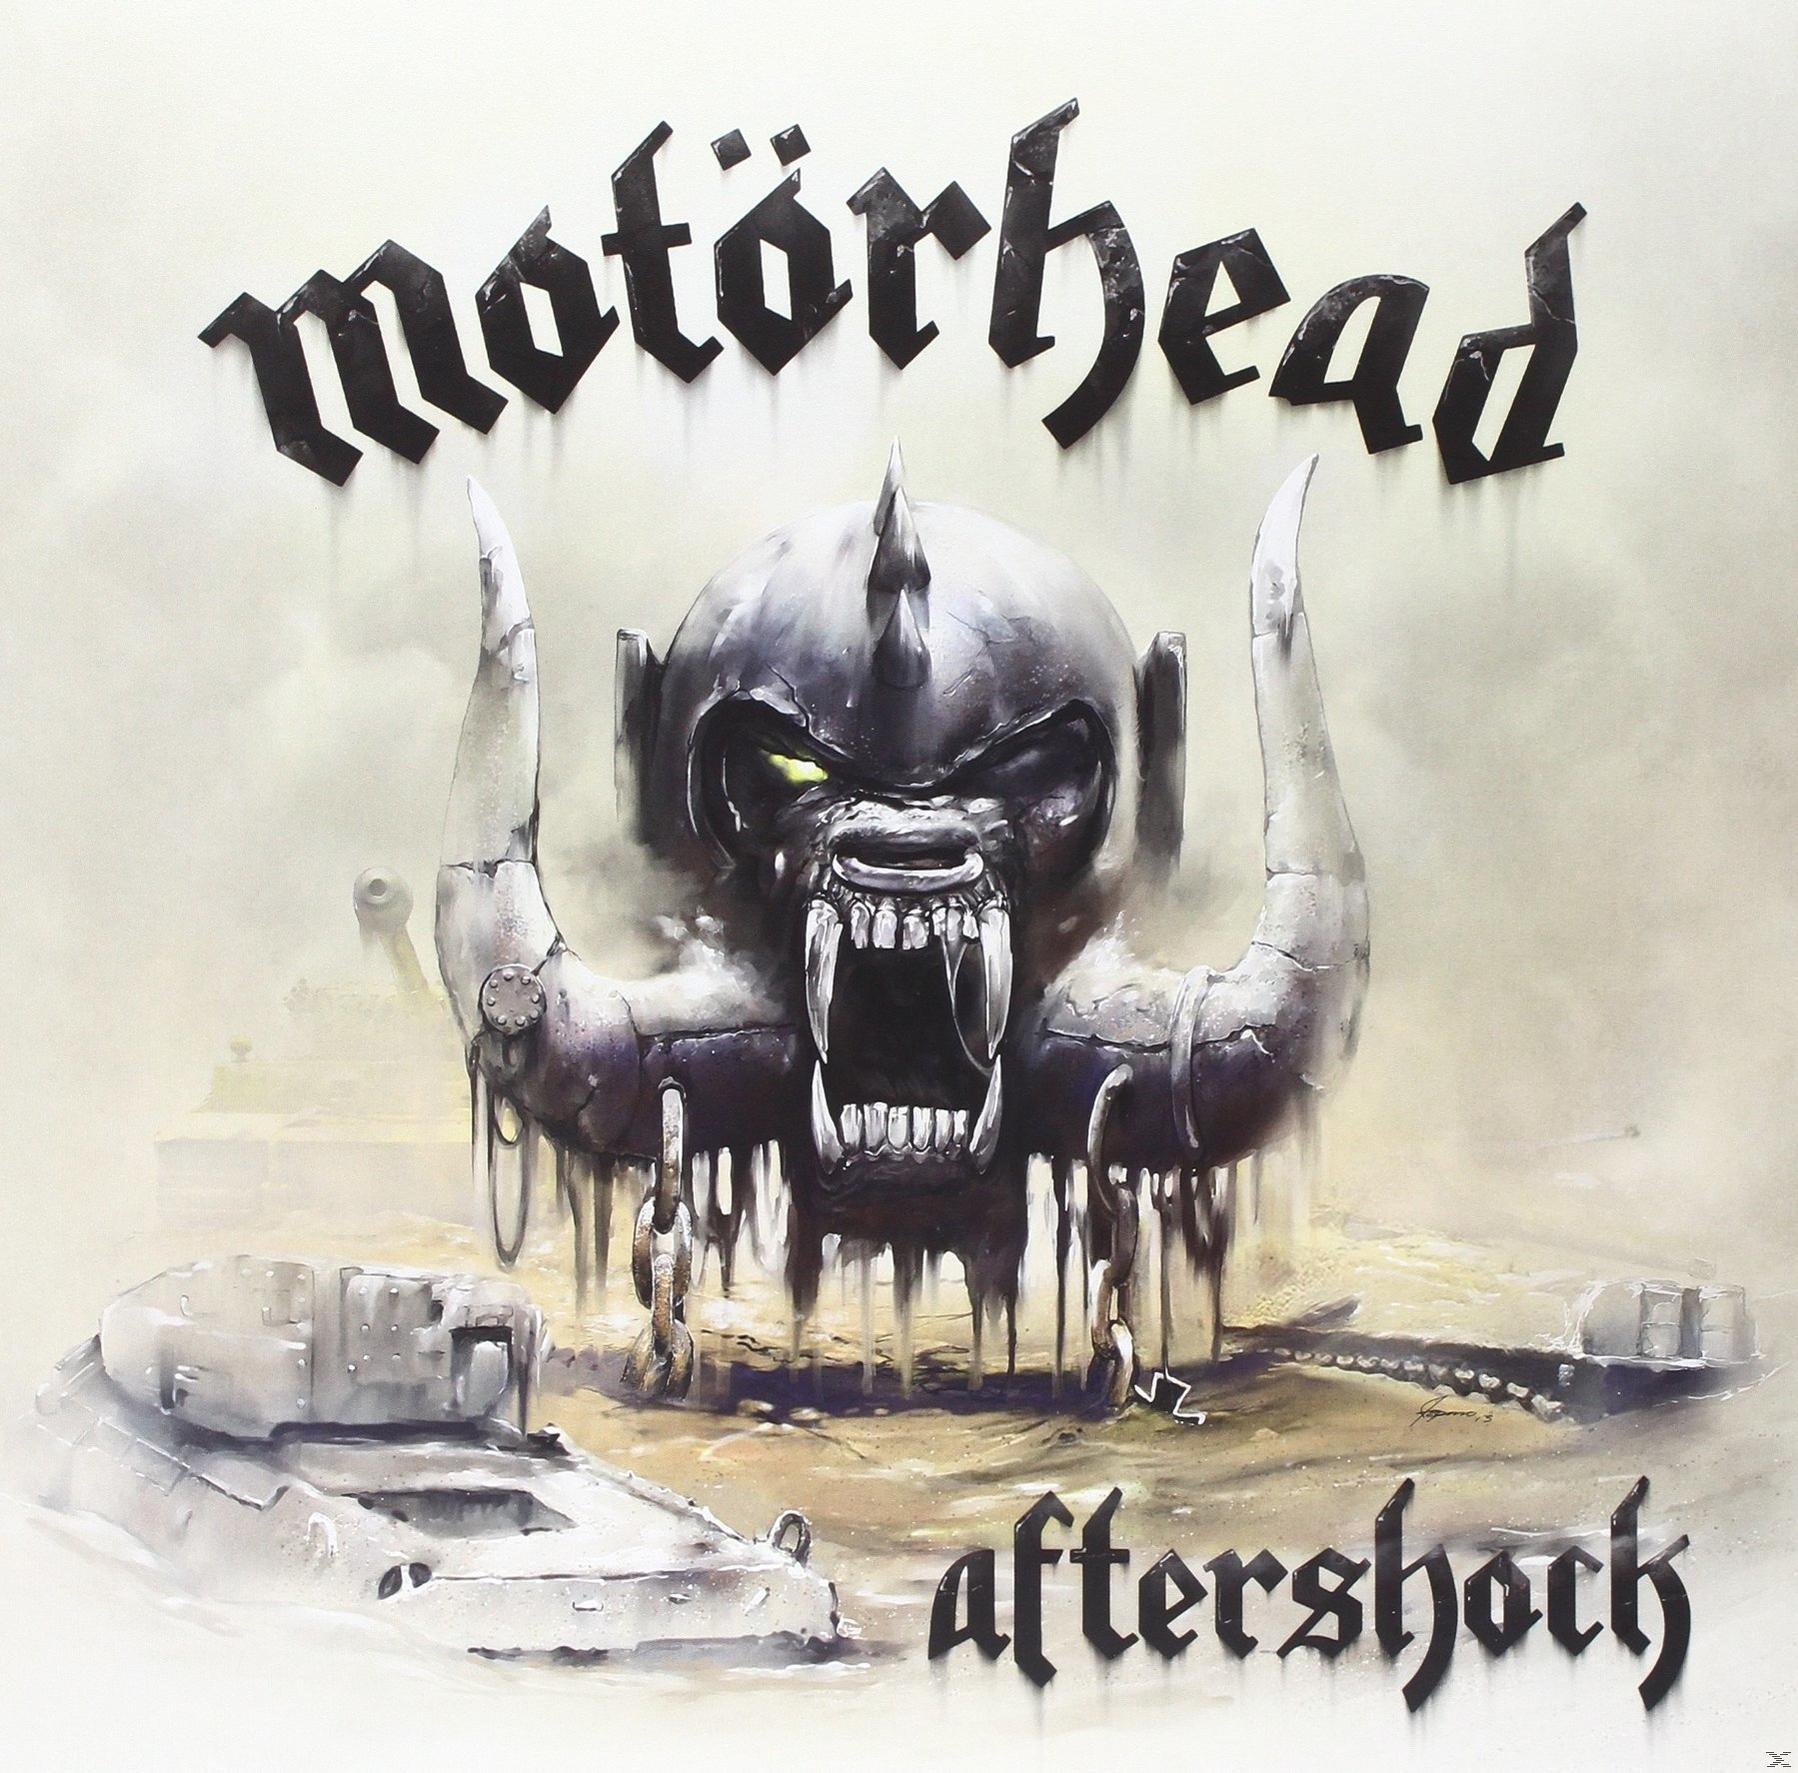 Motörhead - Aftershock Rsd - [Vinyl Lp] (Vinyl)